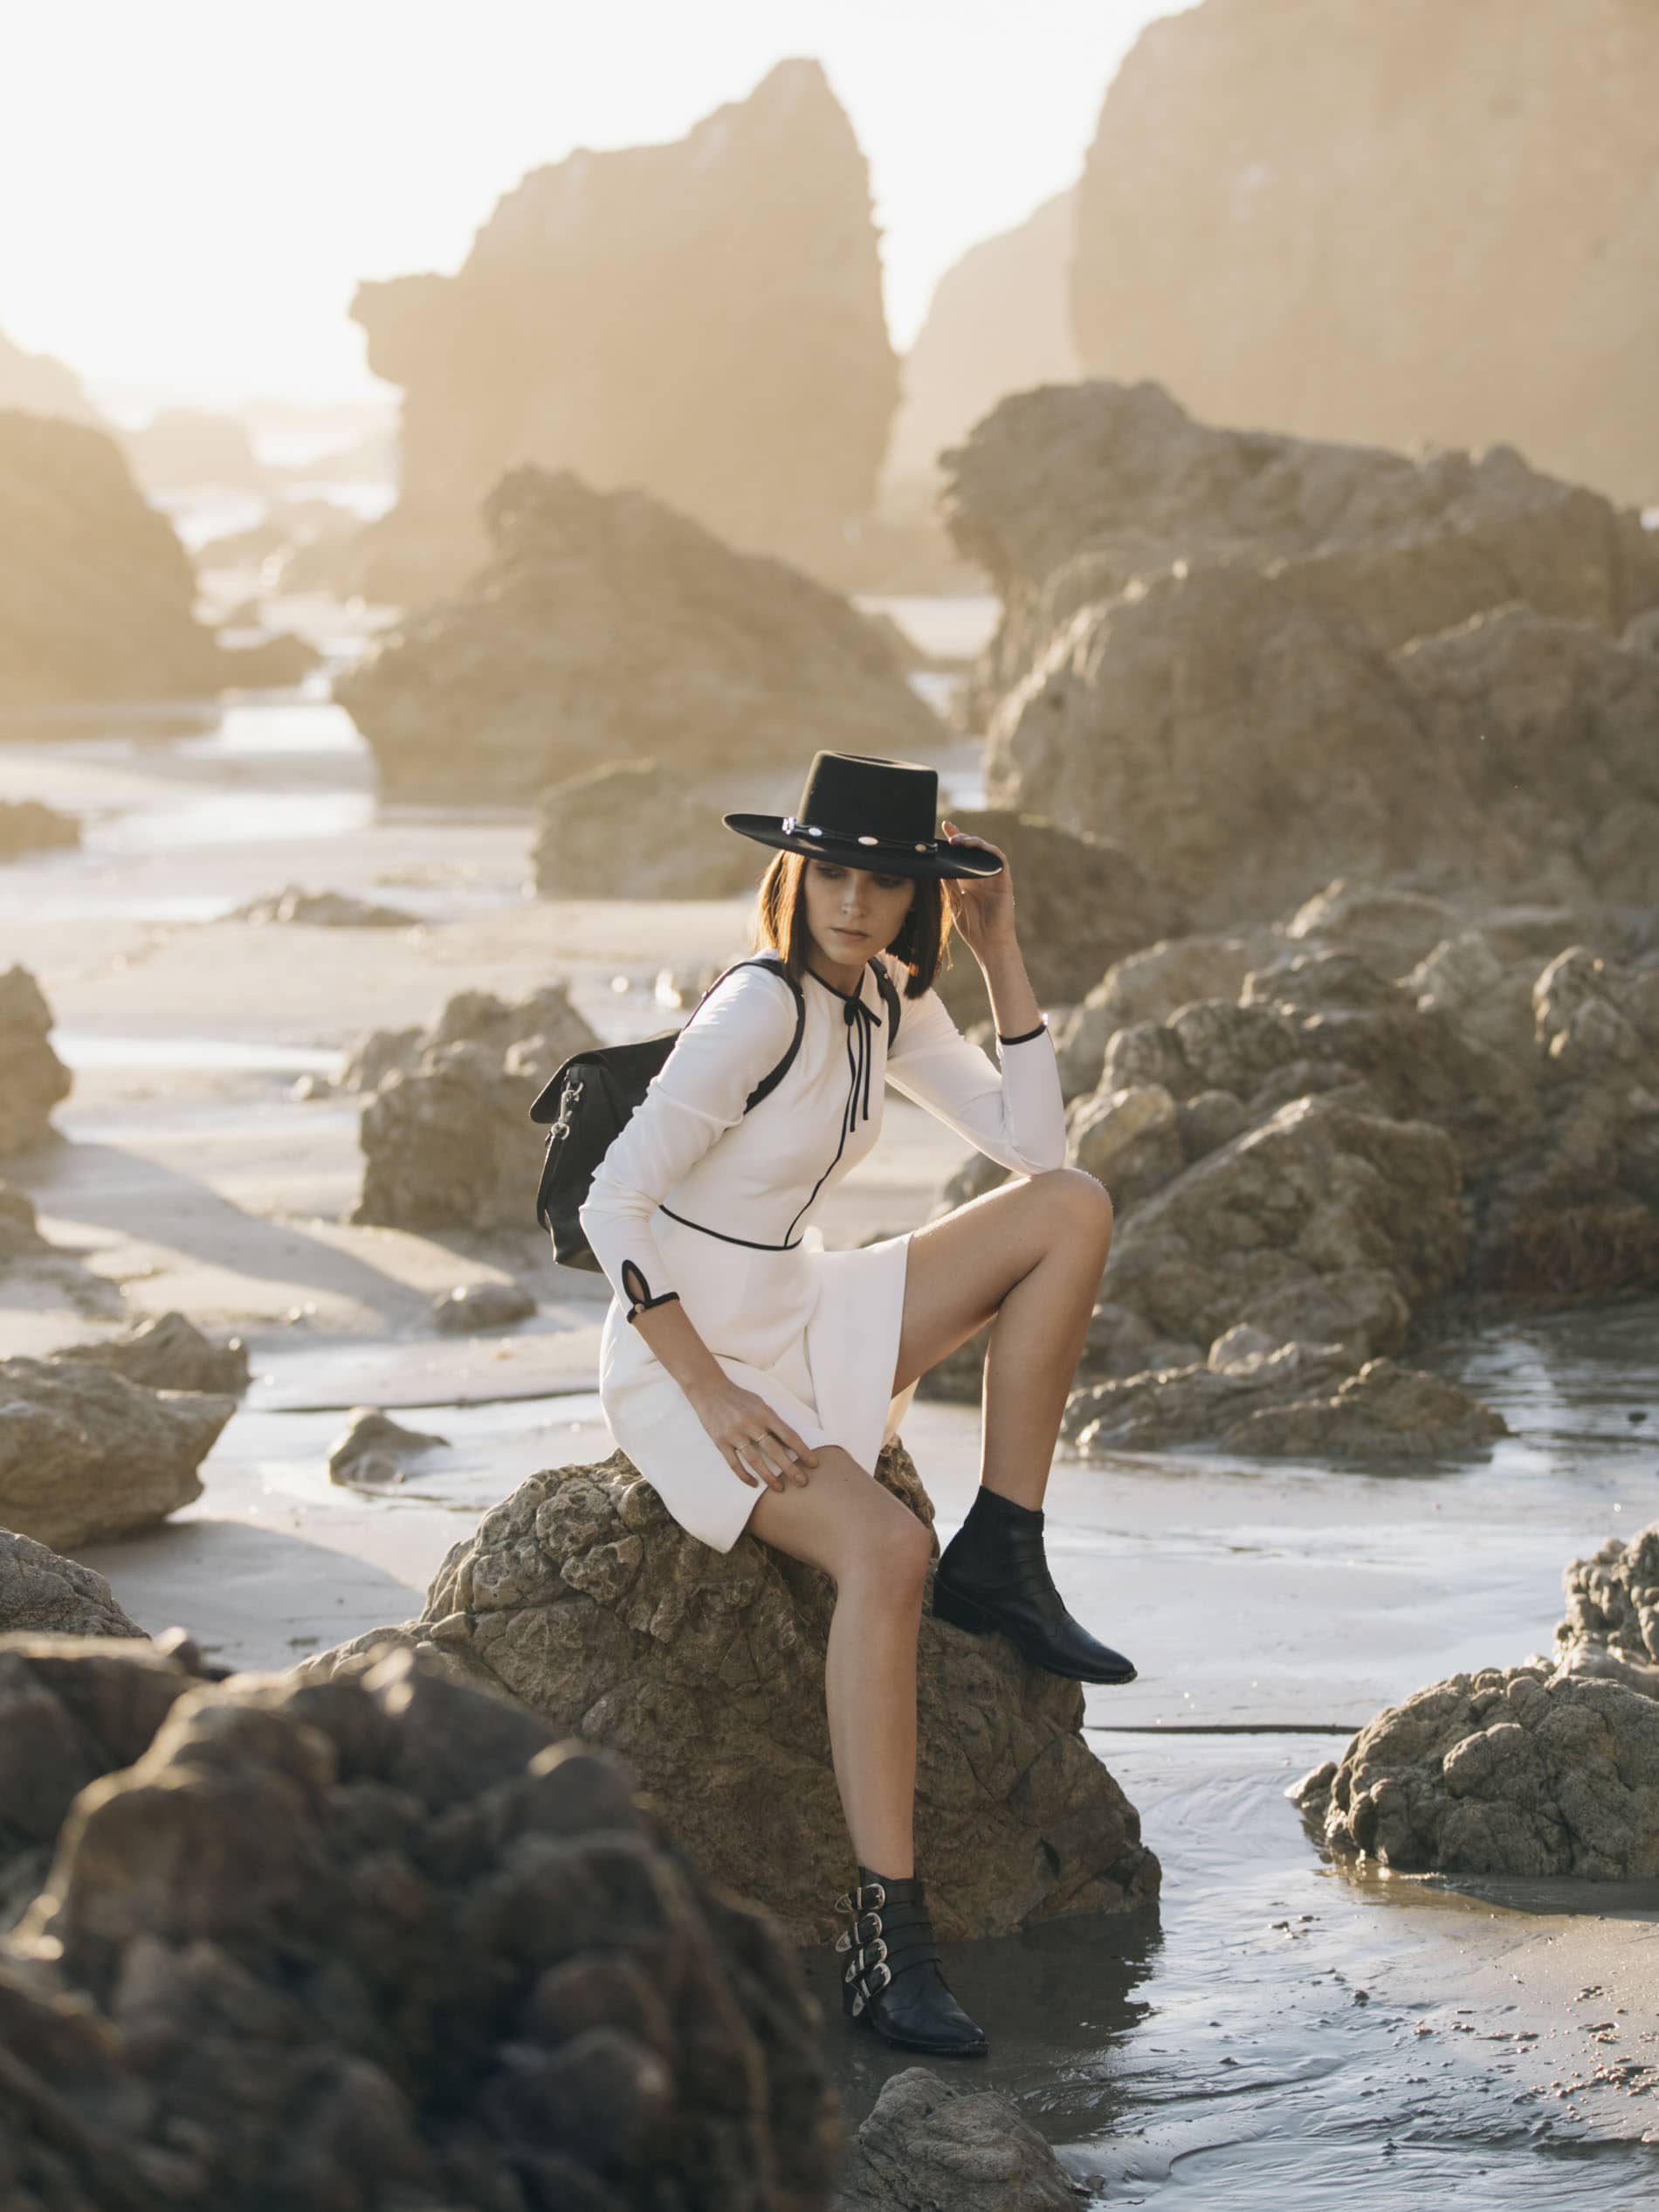 Sitting on the rocks, Ted Baker cowboy outfit - El Matador Beach, Malibu